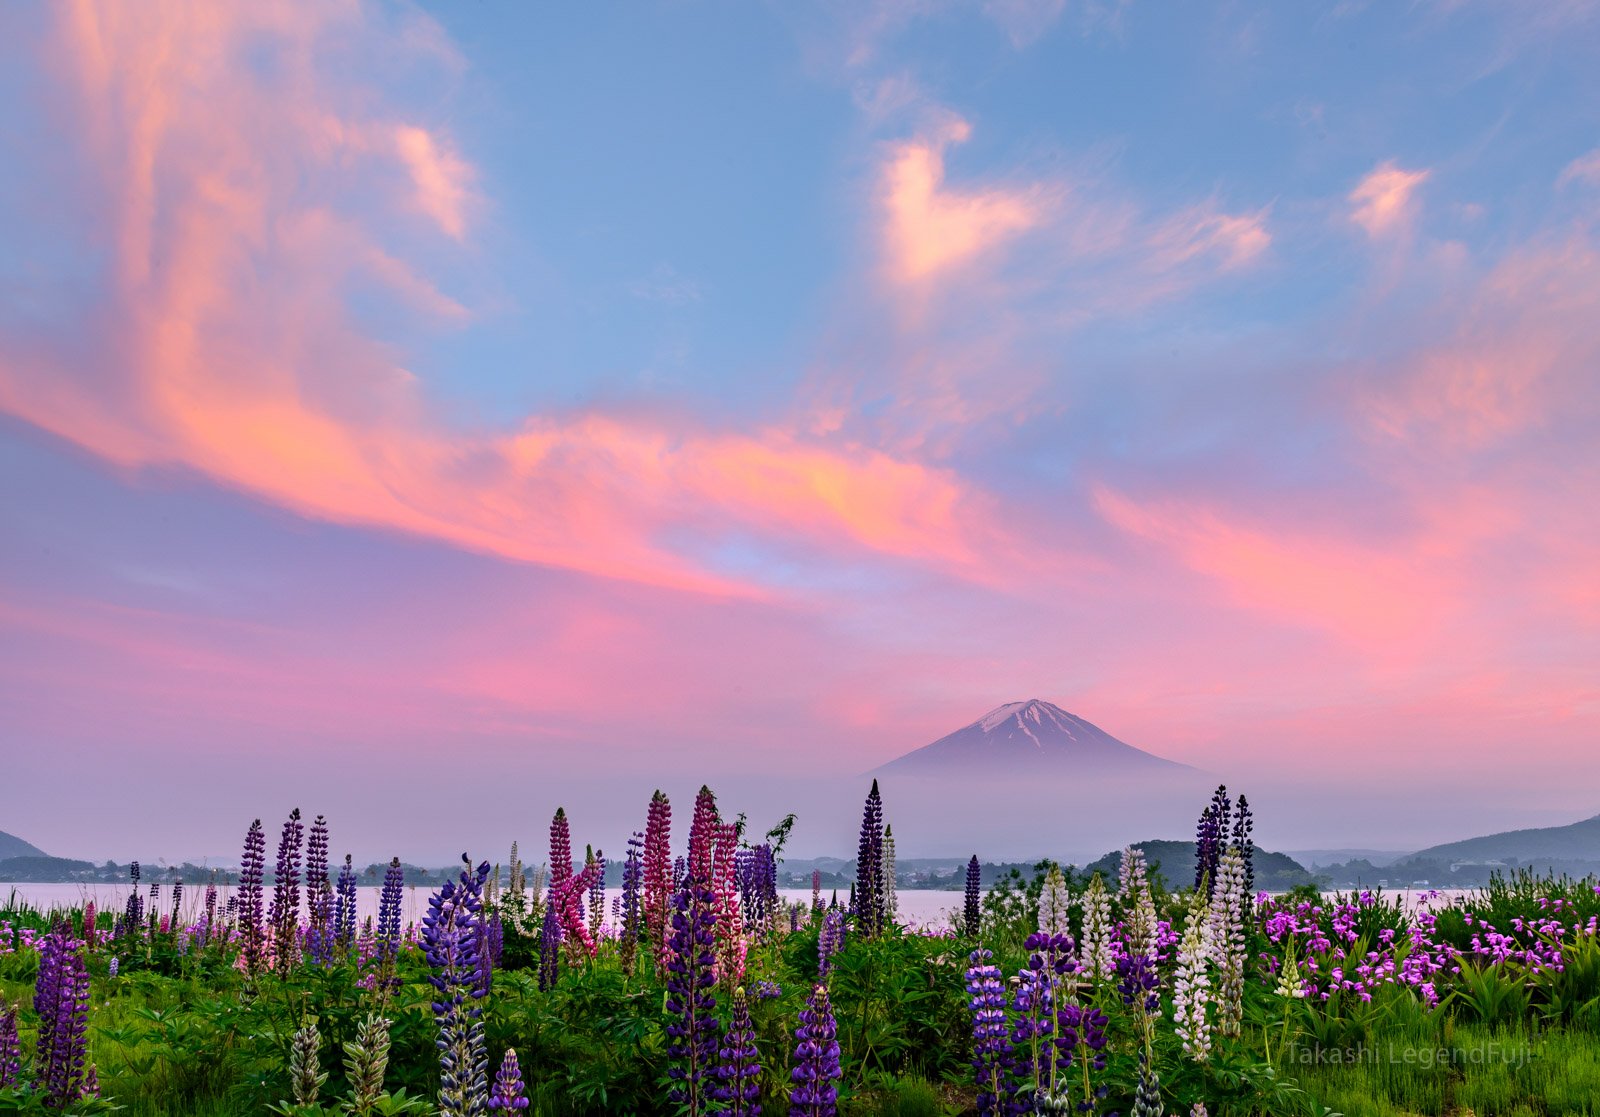 Fuji,mountain,Japan,lupine,flower,cloud,red,pink,blue,day,flower,beautiful,landscape, Takashi